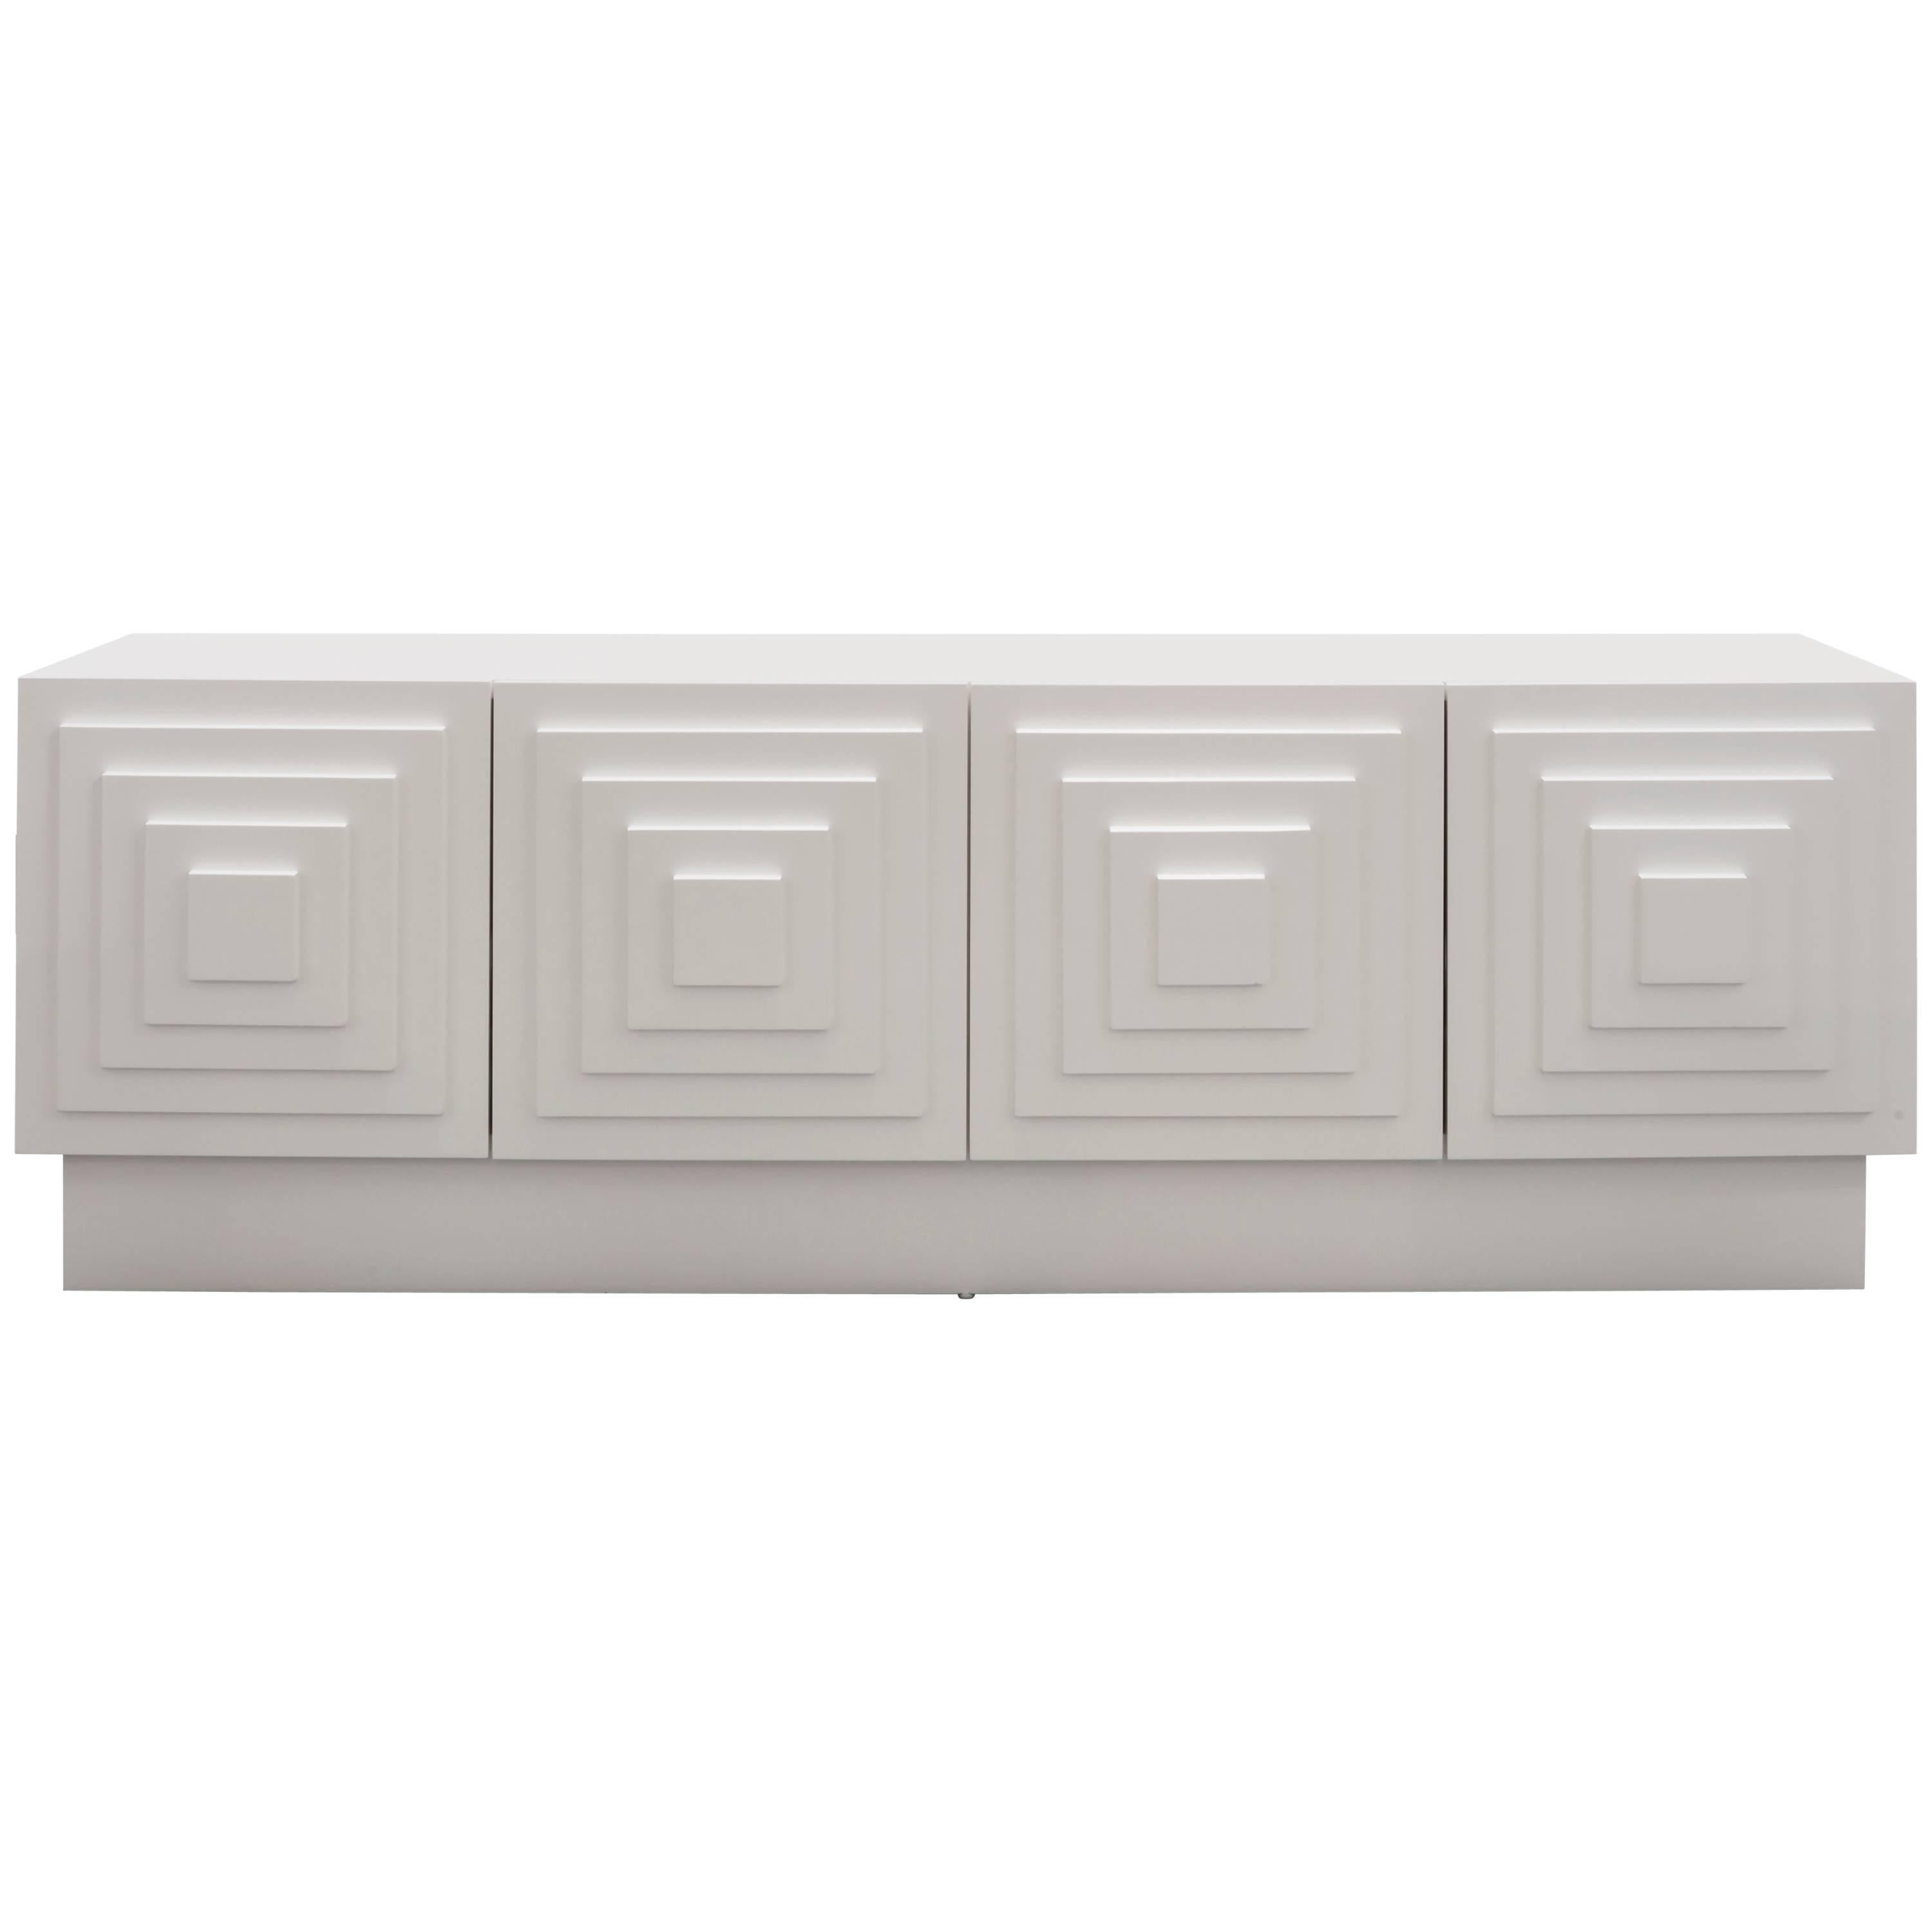 GAULTIER MEDIA CREDENZA - Cabinet géométrique moderne en laque blanche en vente